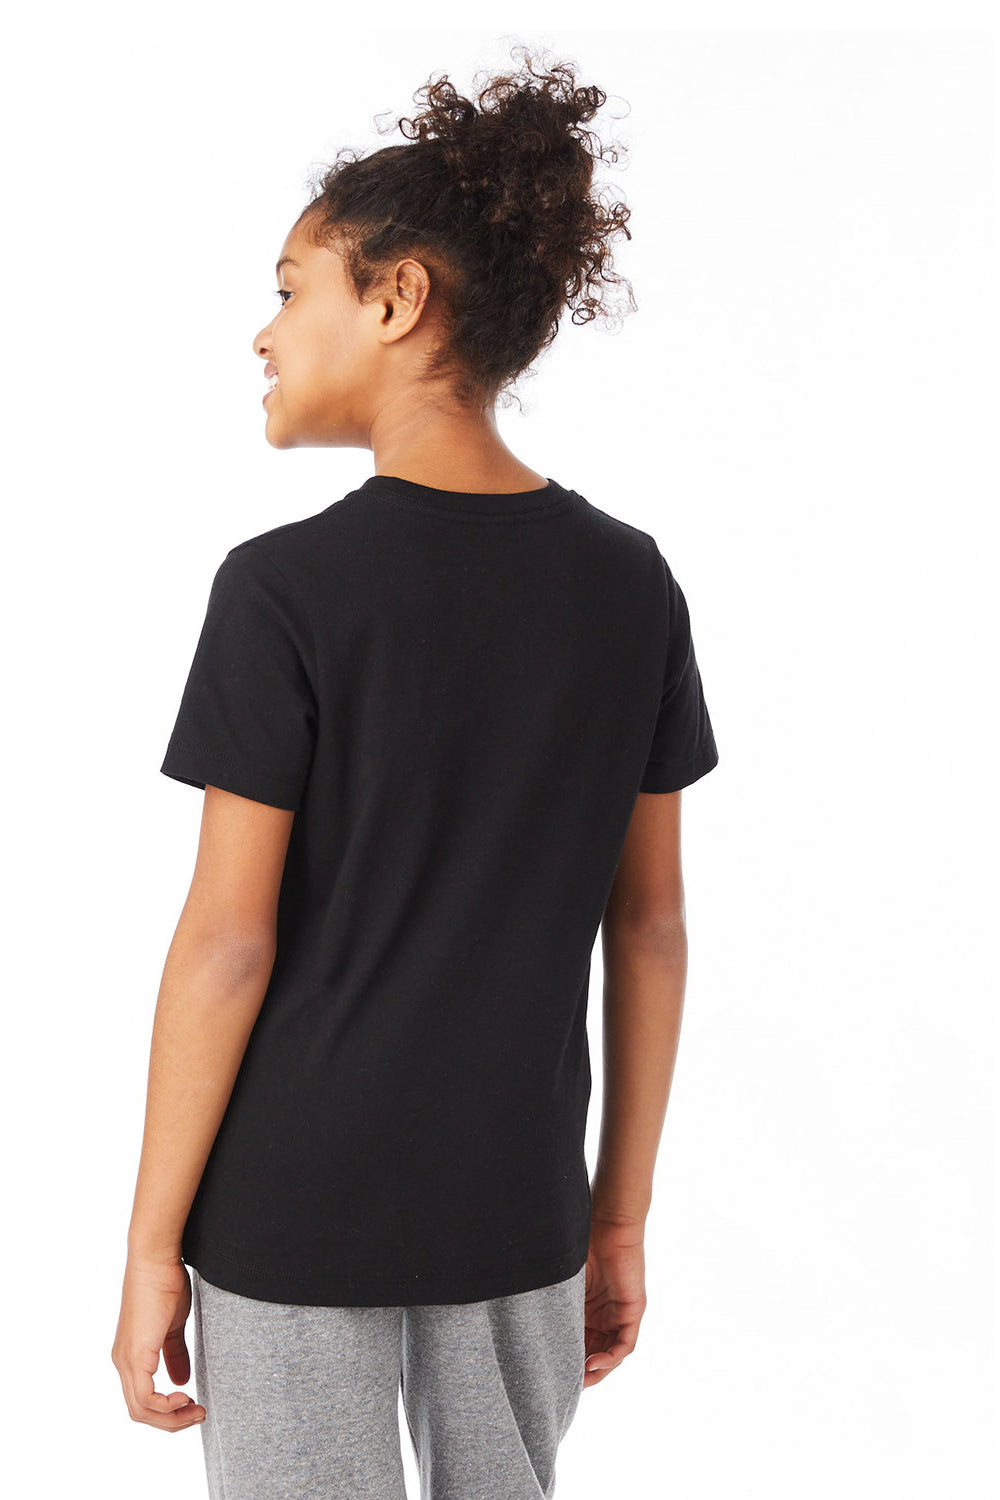 Alternative K1070 Youth Go To Short Sleeve Crewneck T-Shirt Black Model Back